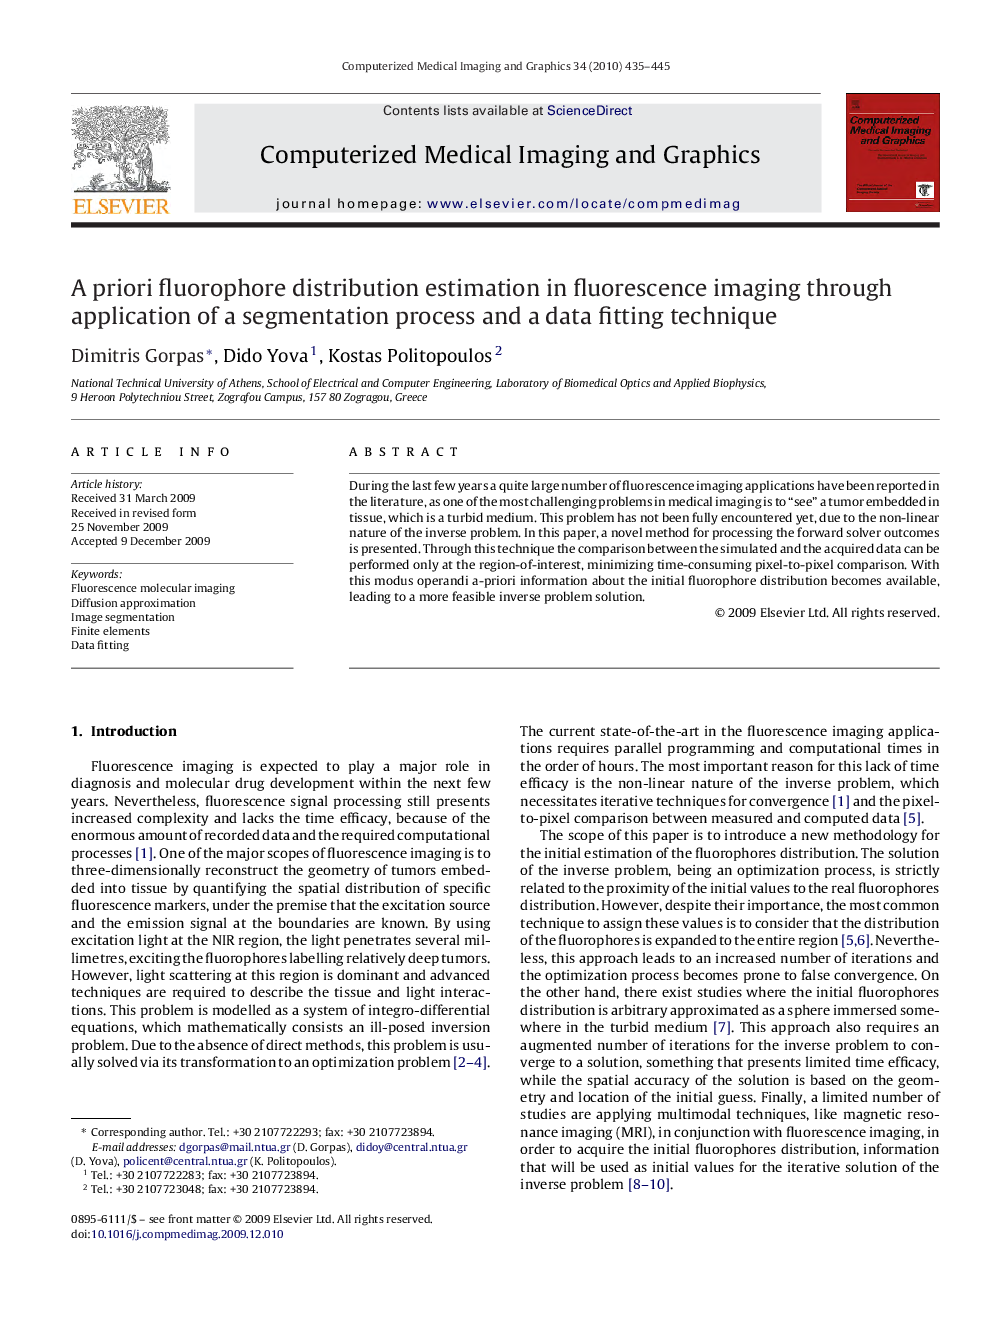 A priori fluorophore distribution estimation in fluorescence imaging through application of a segmentation process and a data fitting technique